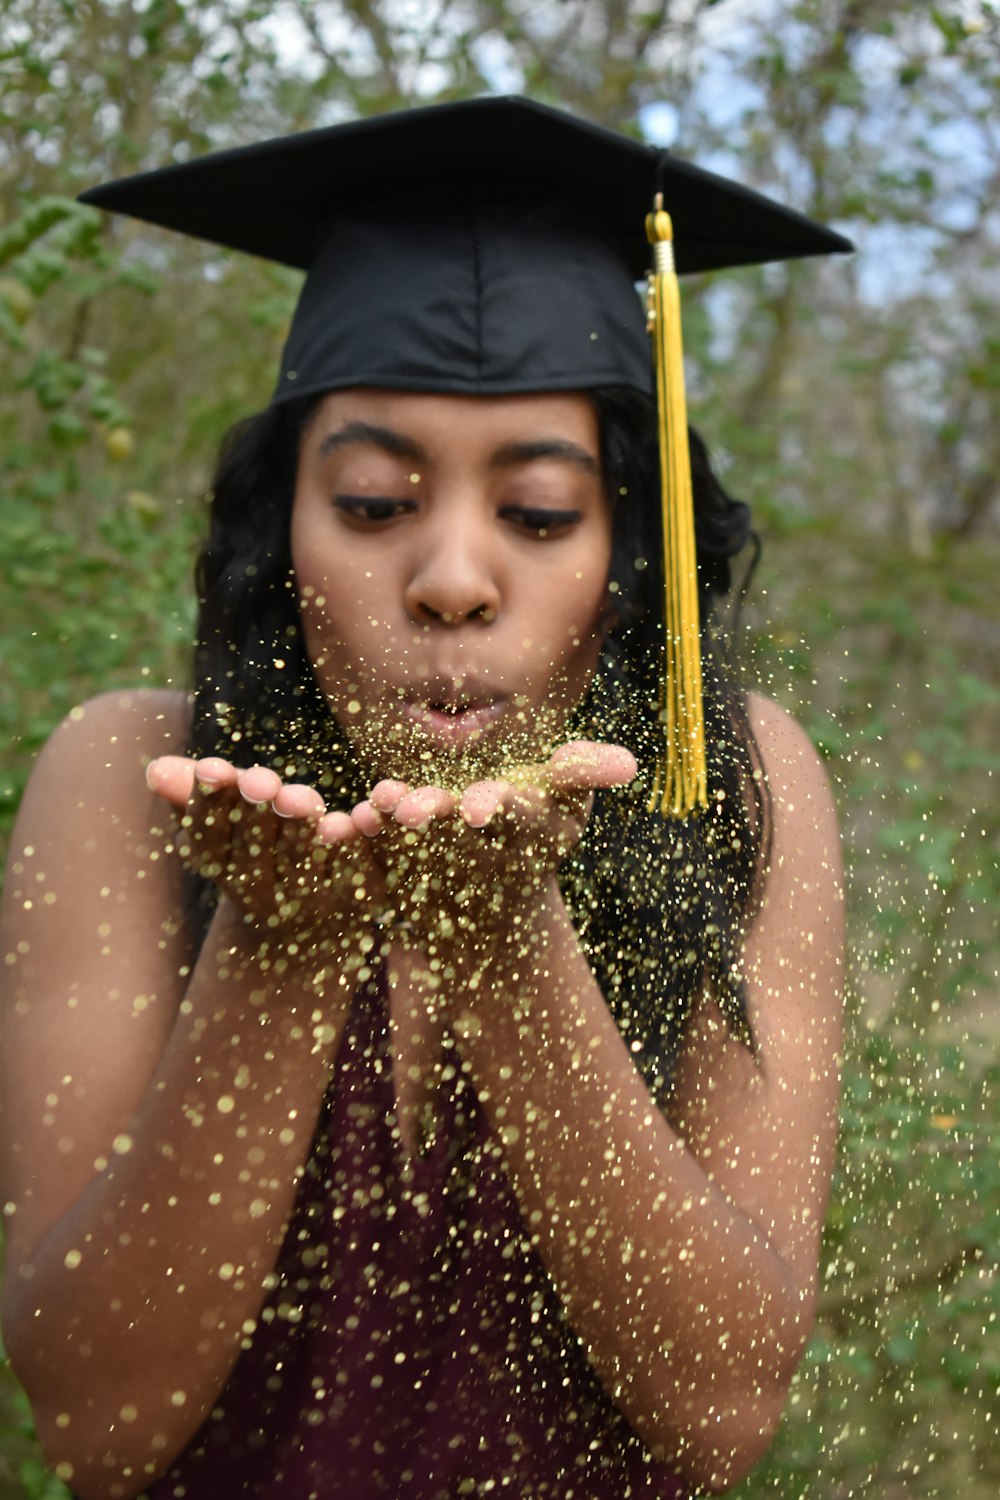 Graduation Photo Pictures | Download Free Images on Unsplash